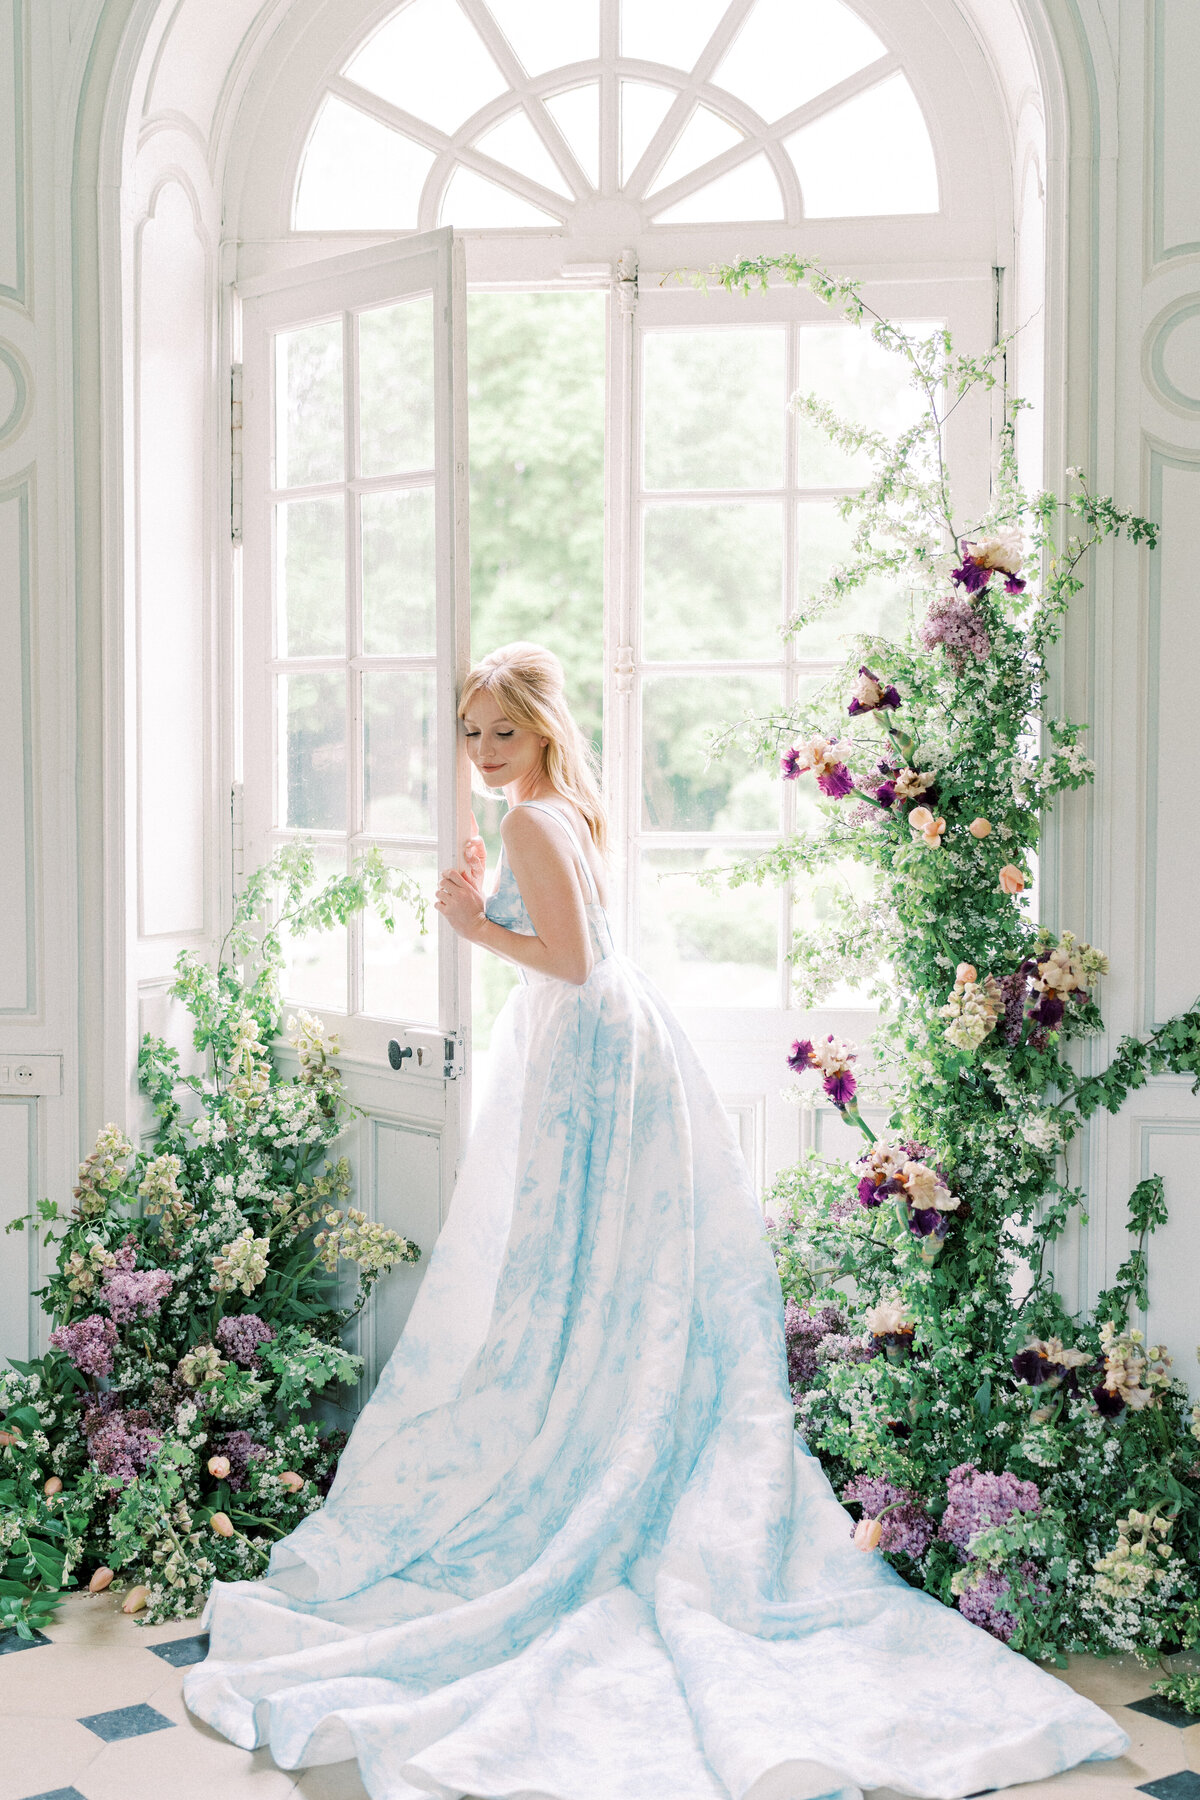 Sarah Rae Floral Designs Wedding Event Florist Flowers Kentucky Chic Whimsical Romantic Weddings70